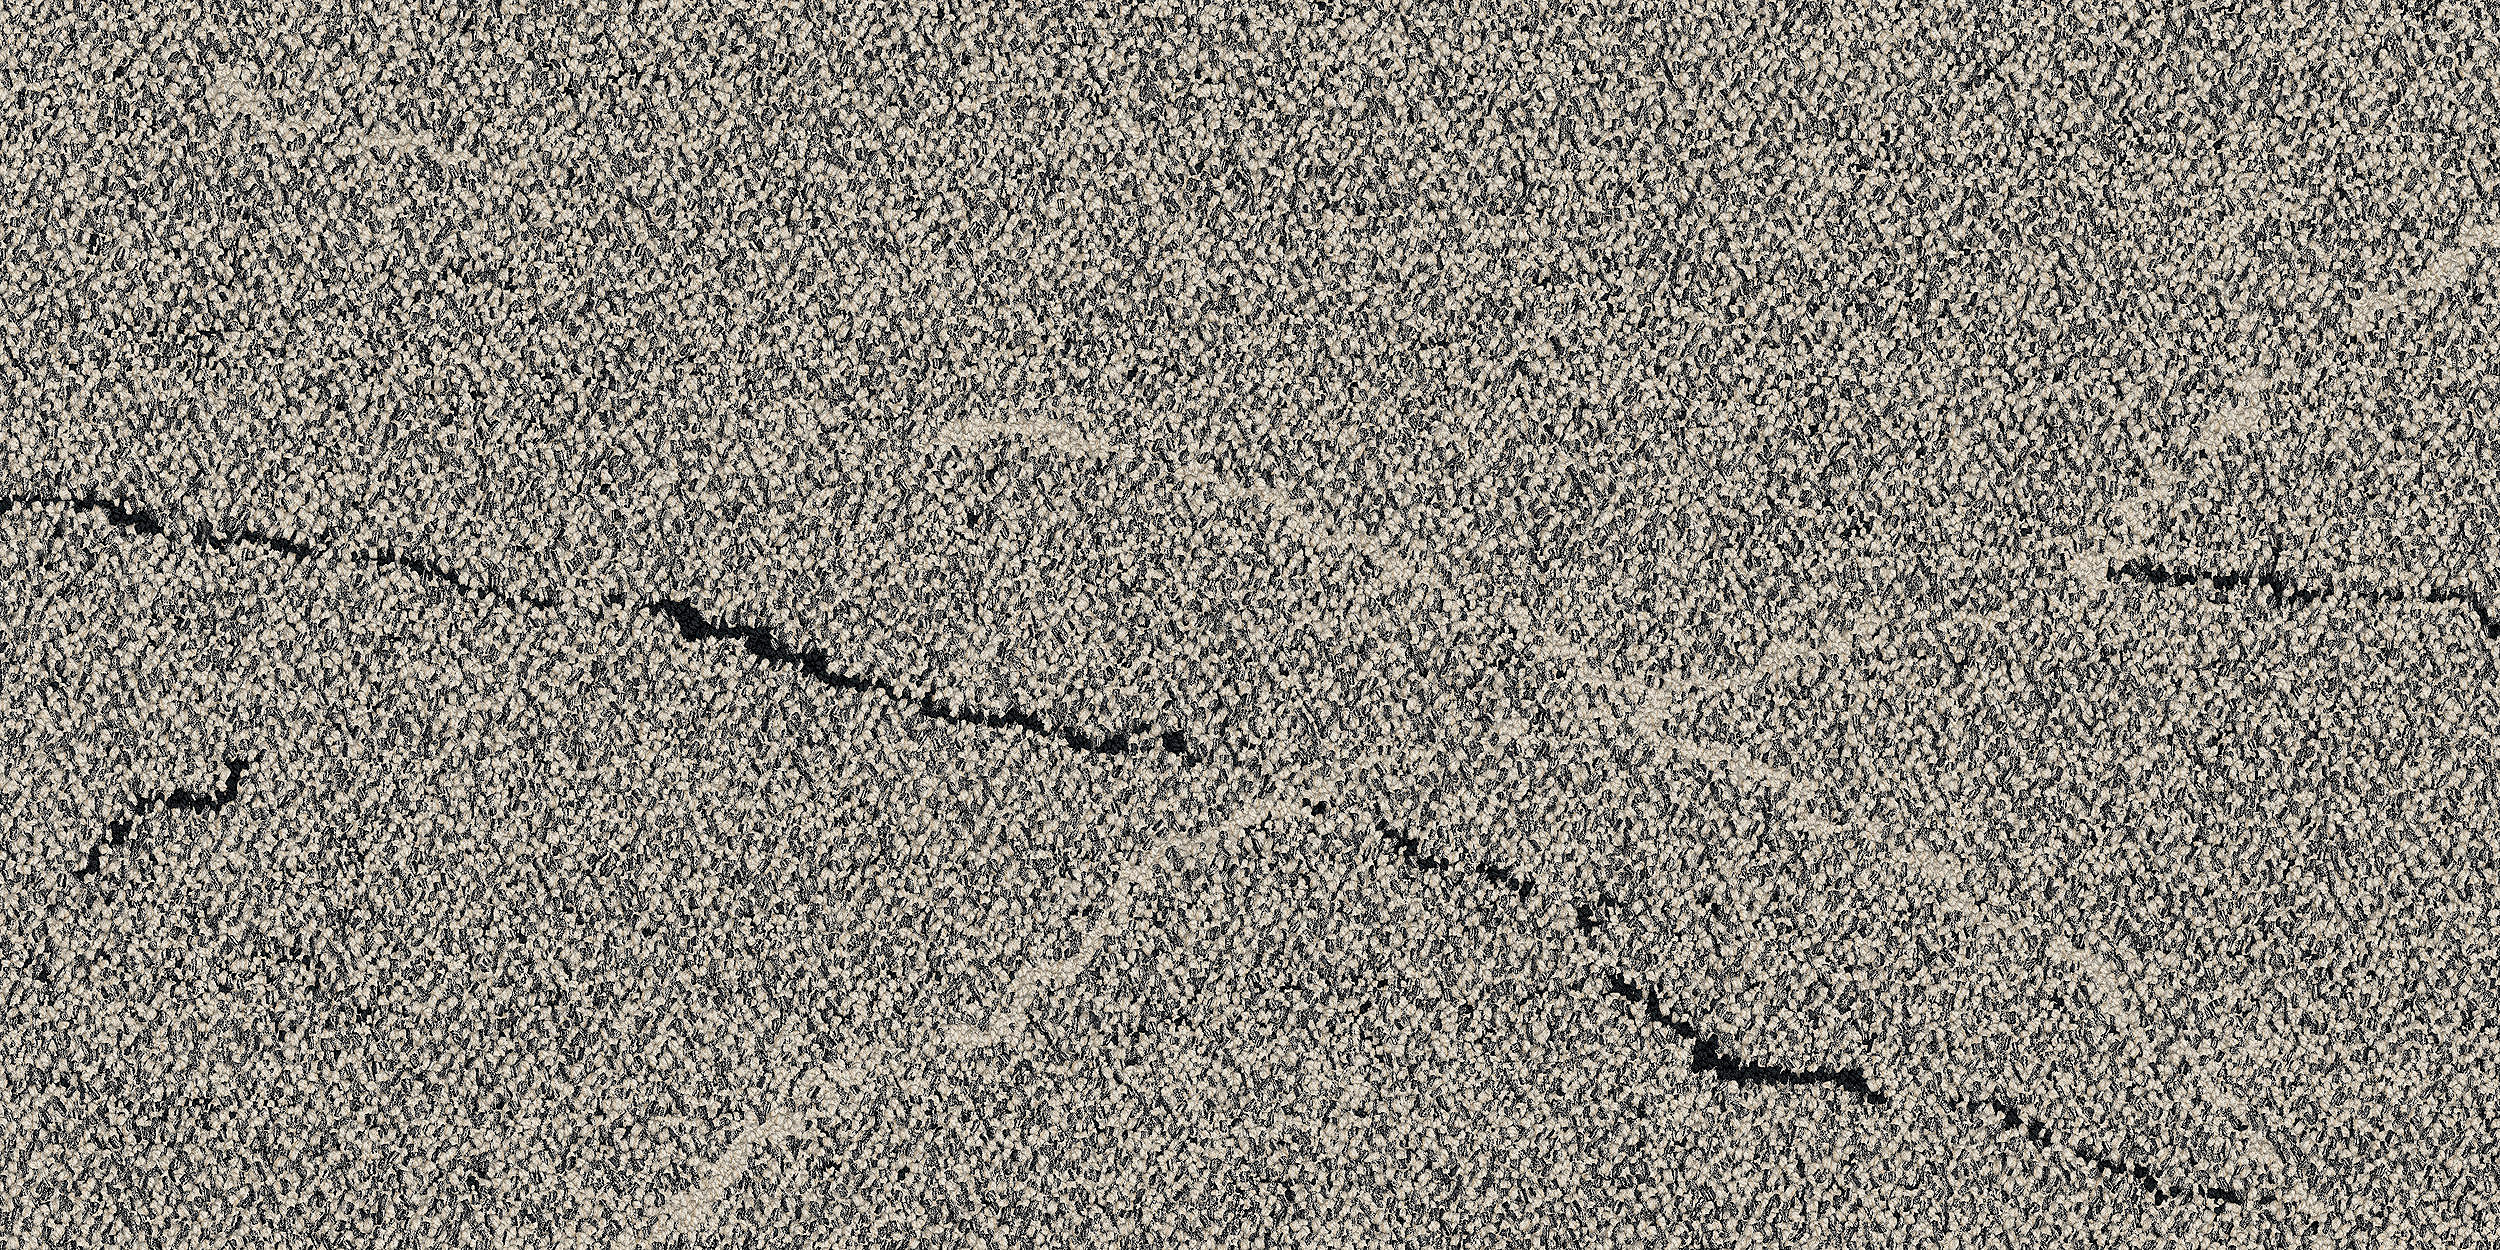 Ribbon Rock Carpet Tile in Mesa image number 6